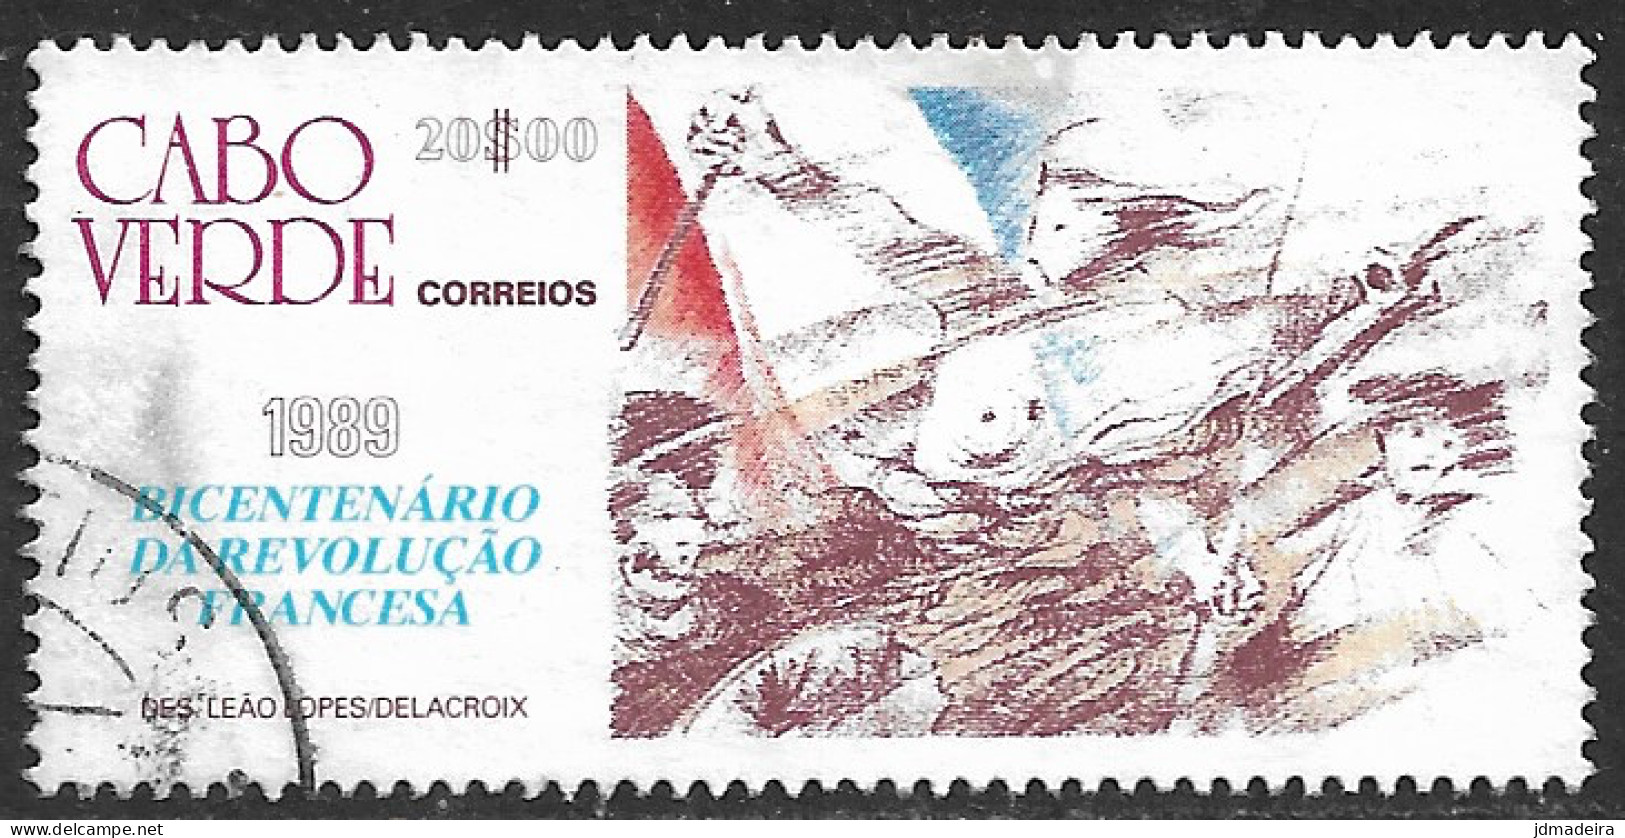 Cabo Verde – 1989 French Revolution 20$00 Used Stamp - Cap Vert